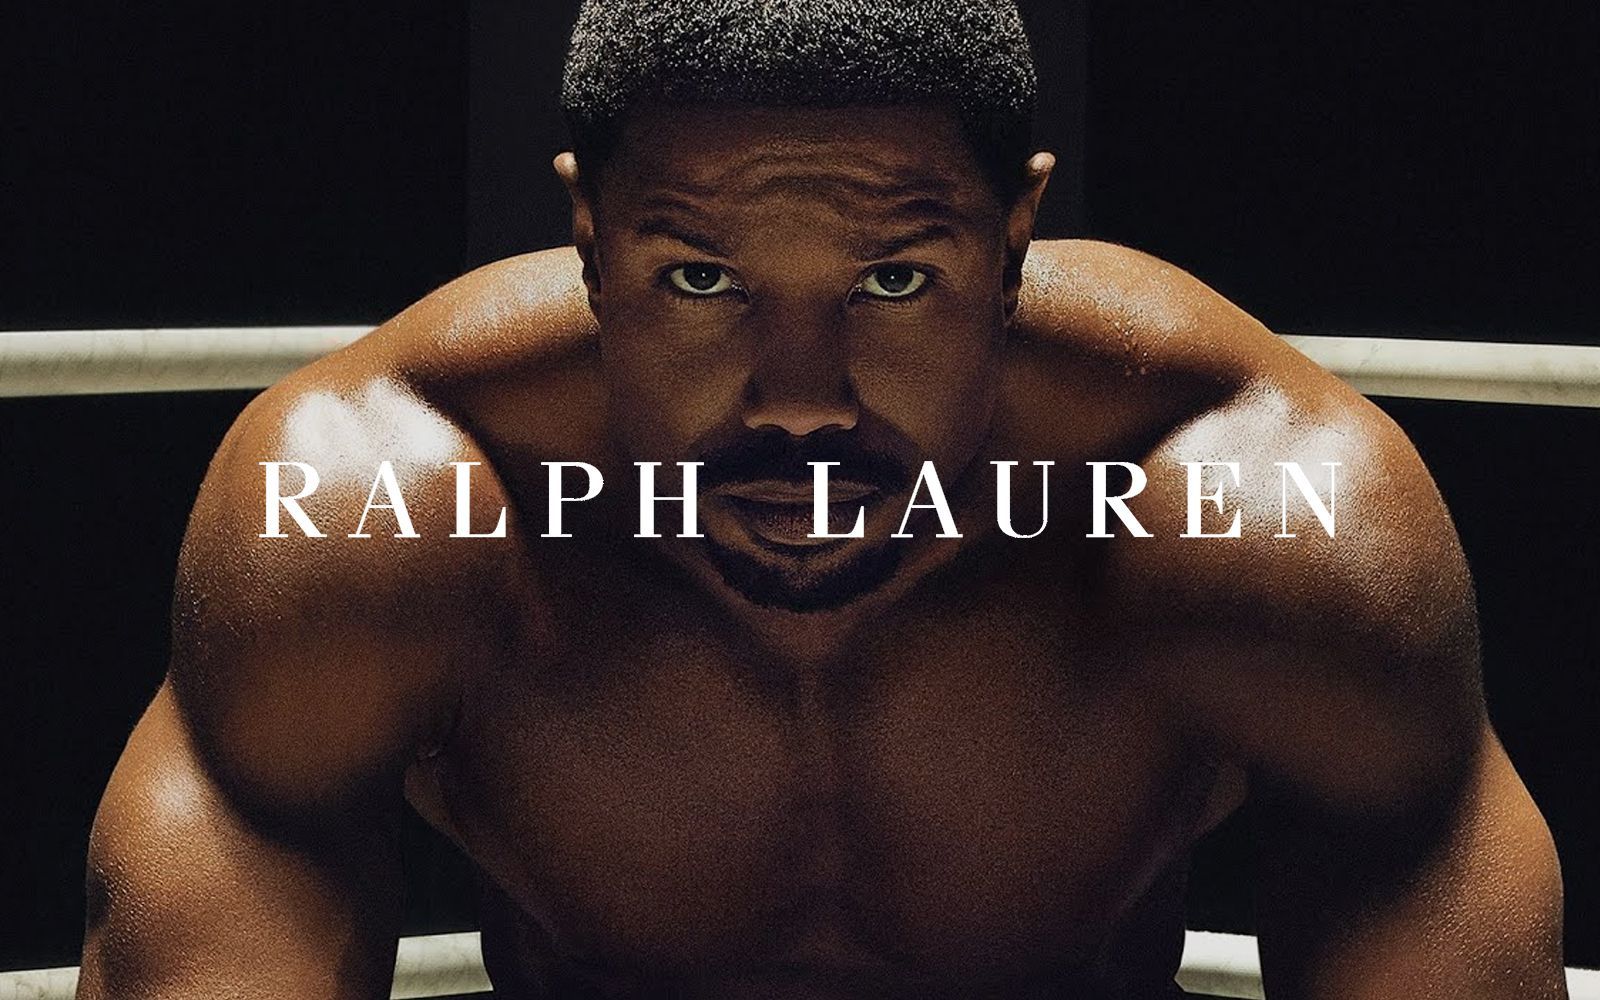 Ralph Lauren - 'Creed' star Michael B. Jordan is the